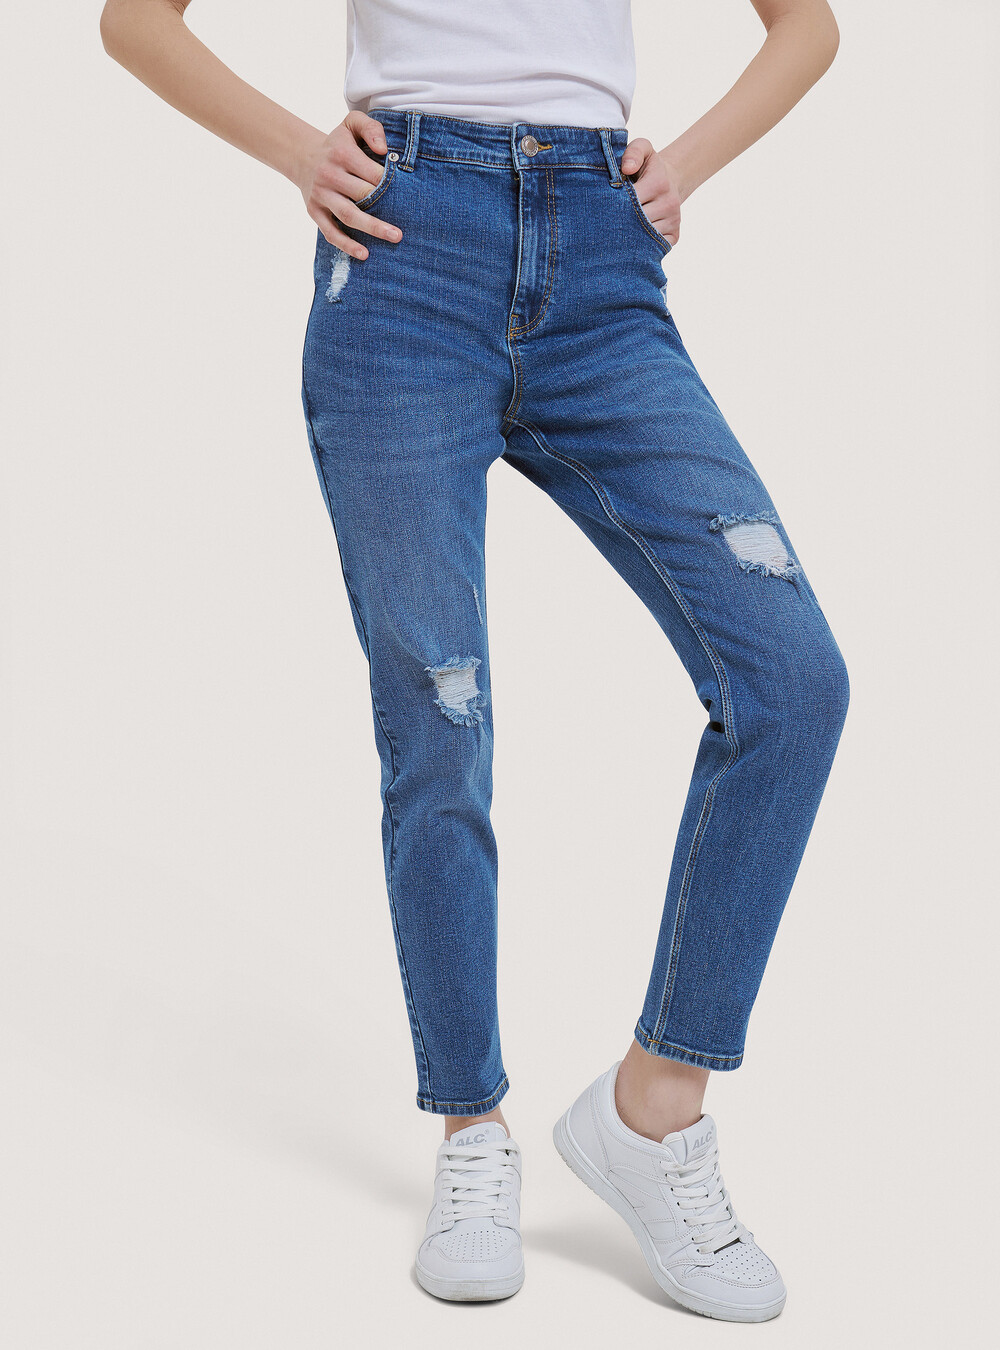 Pantalones tiro medio | Alcott Jeans Enjoy Life Uomo